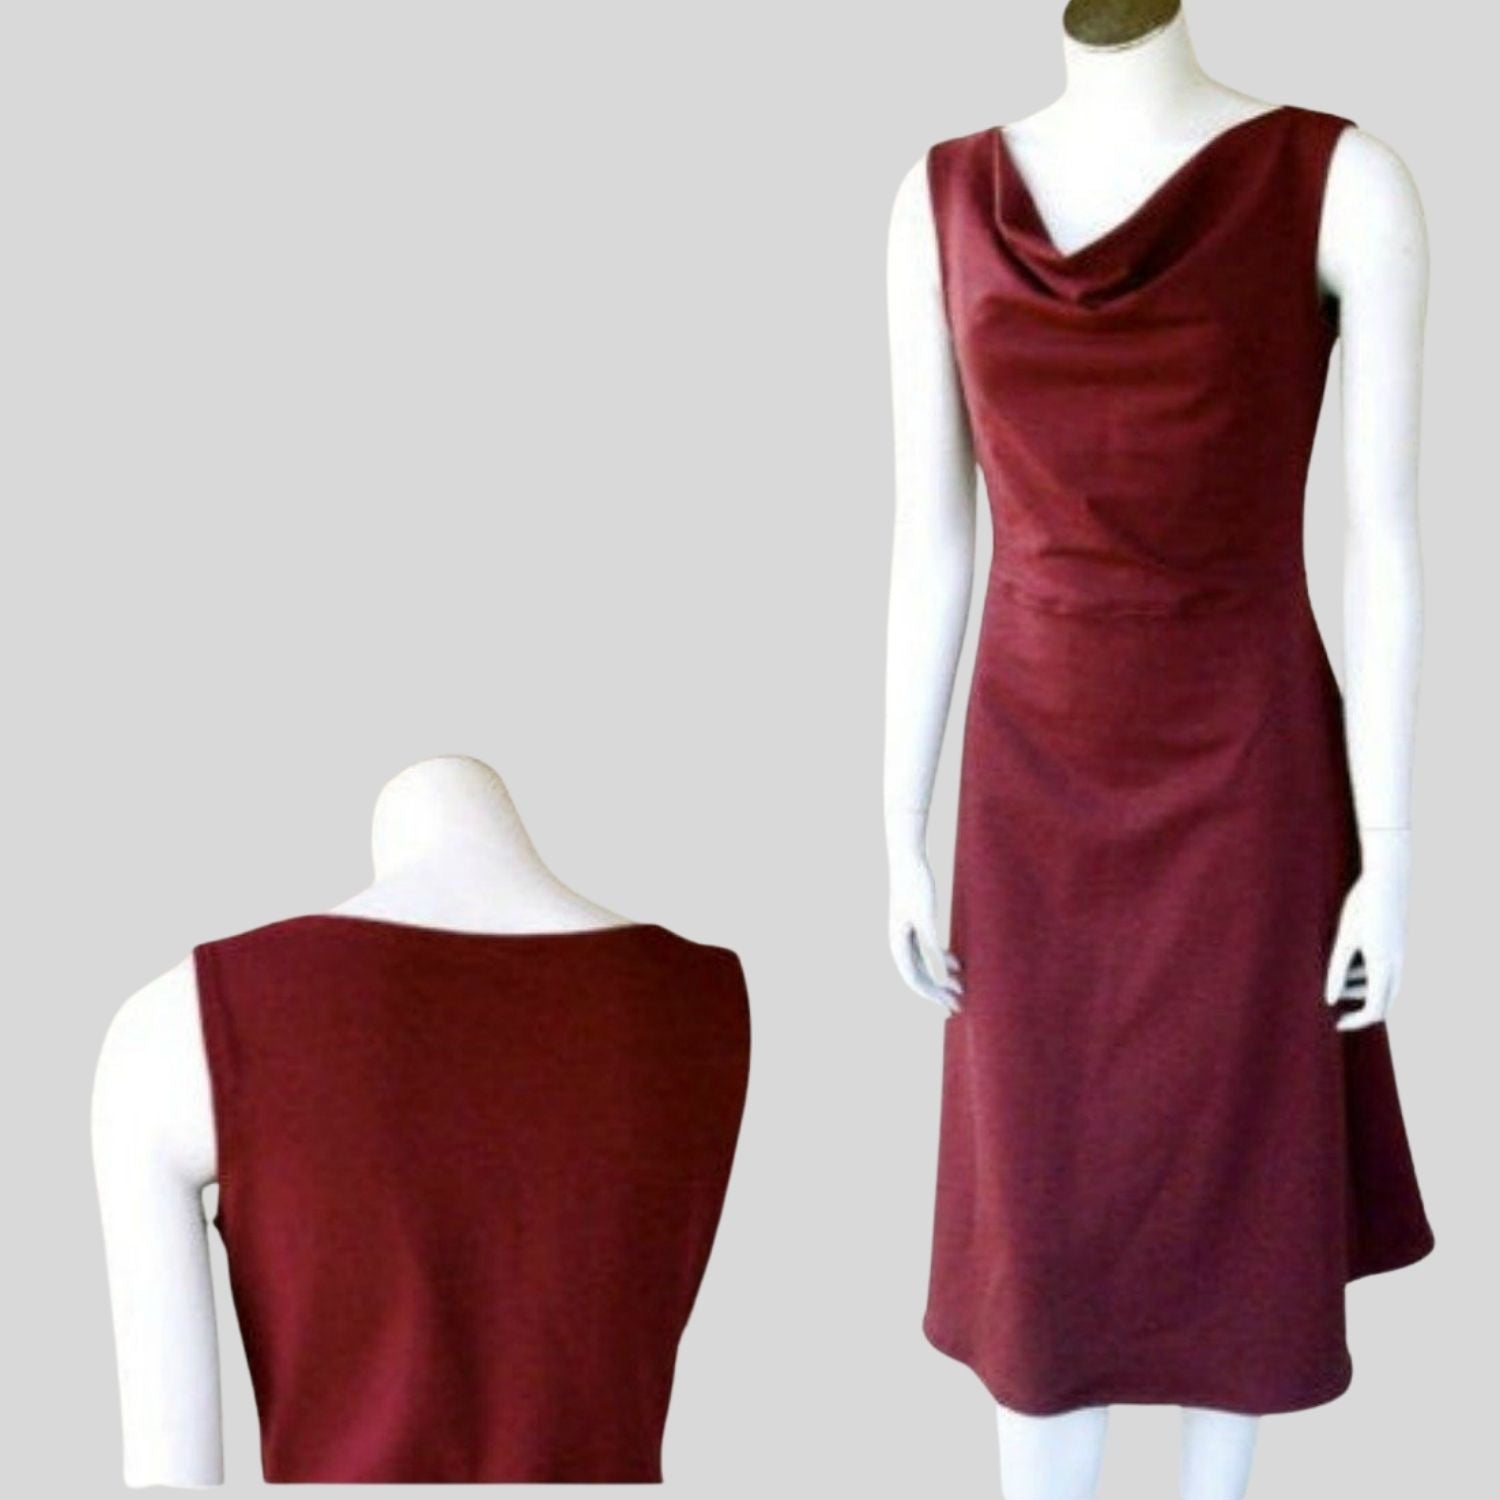 Maxi summer dress made in Canada | Long sleeveless boatneck dress | Buy made in Canada organic cotton dresses